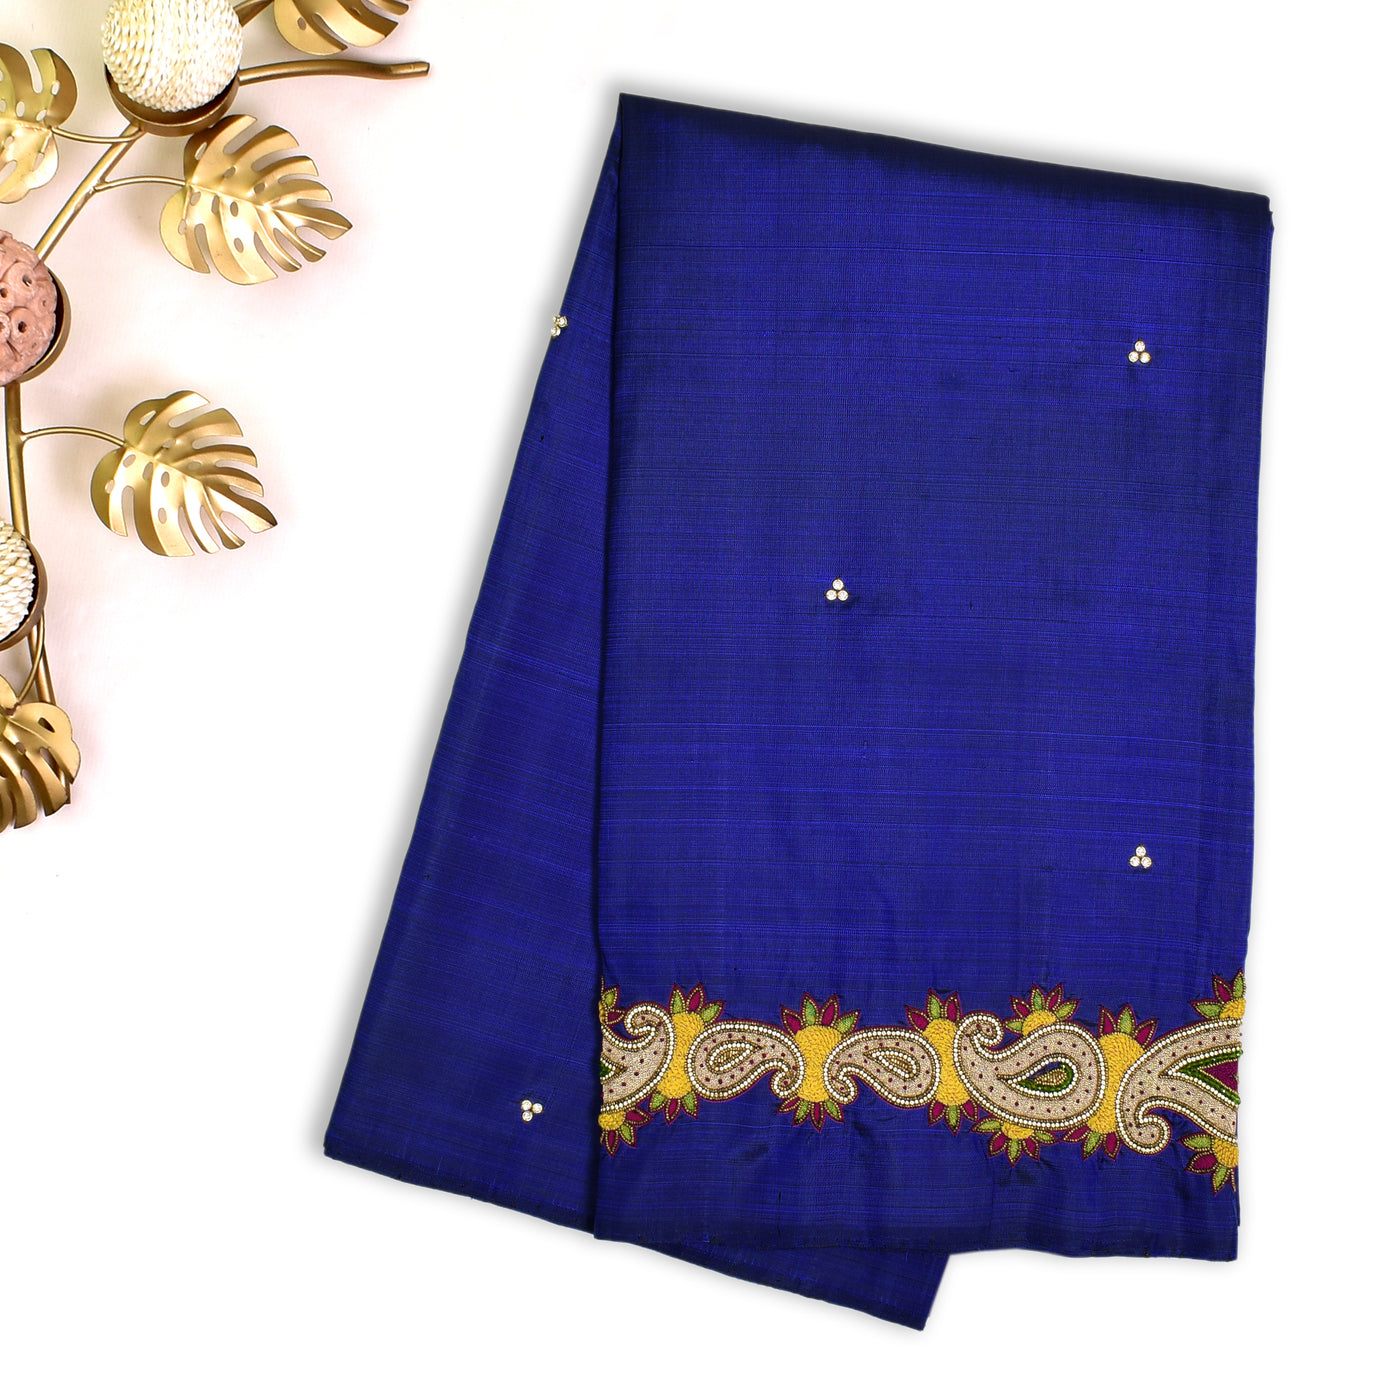 MS Blue Embroidery Silk Saree